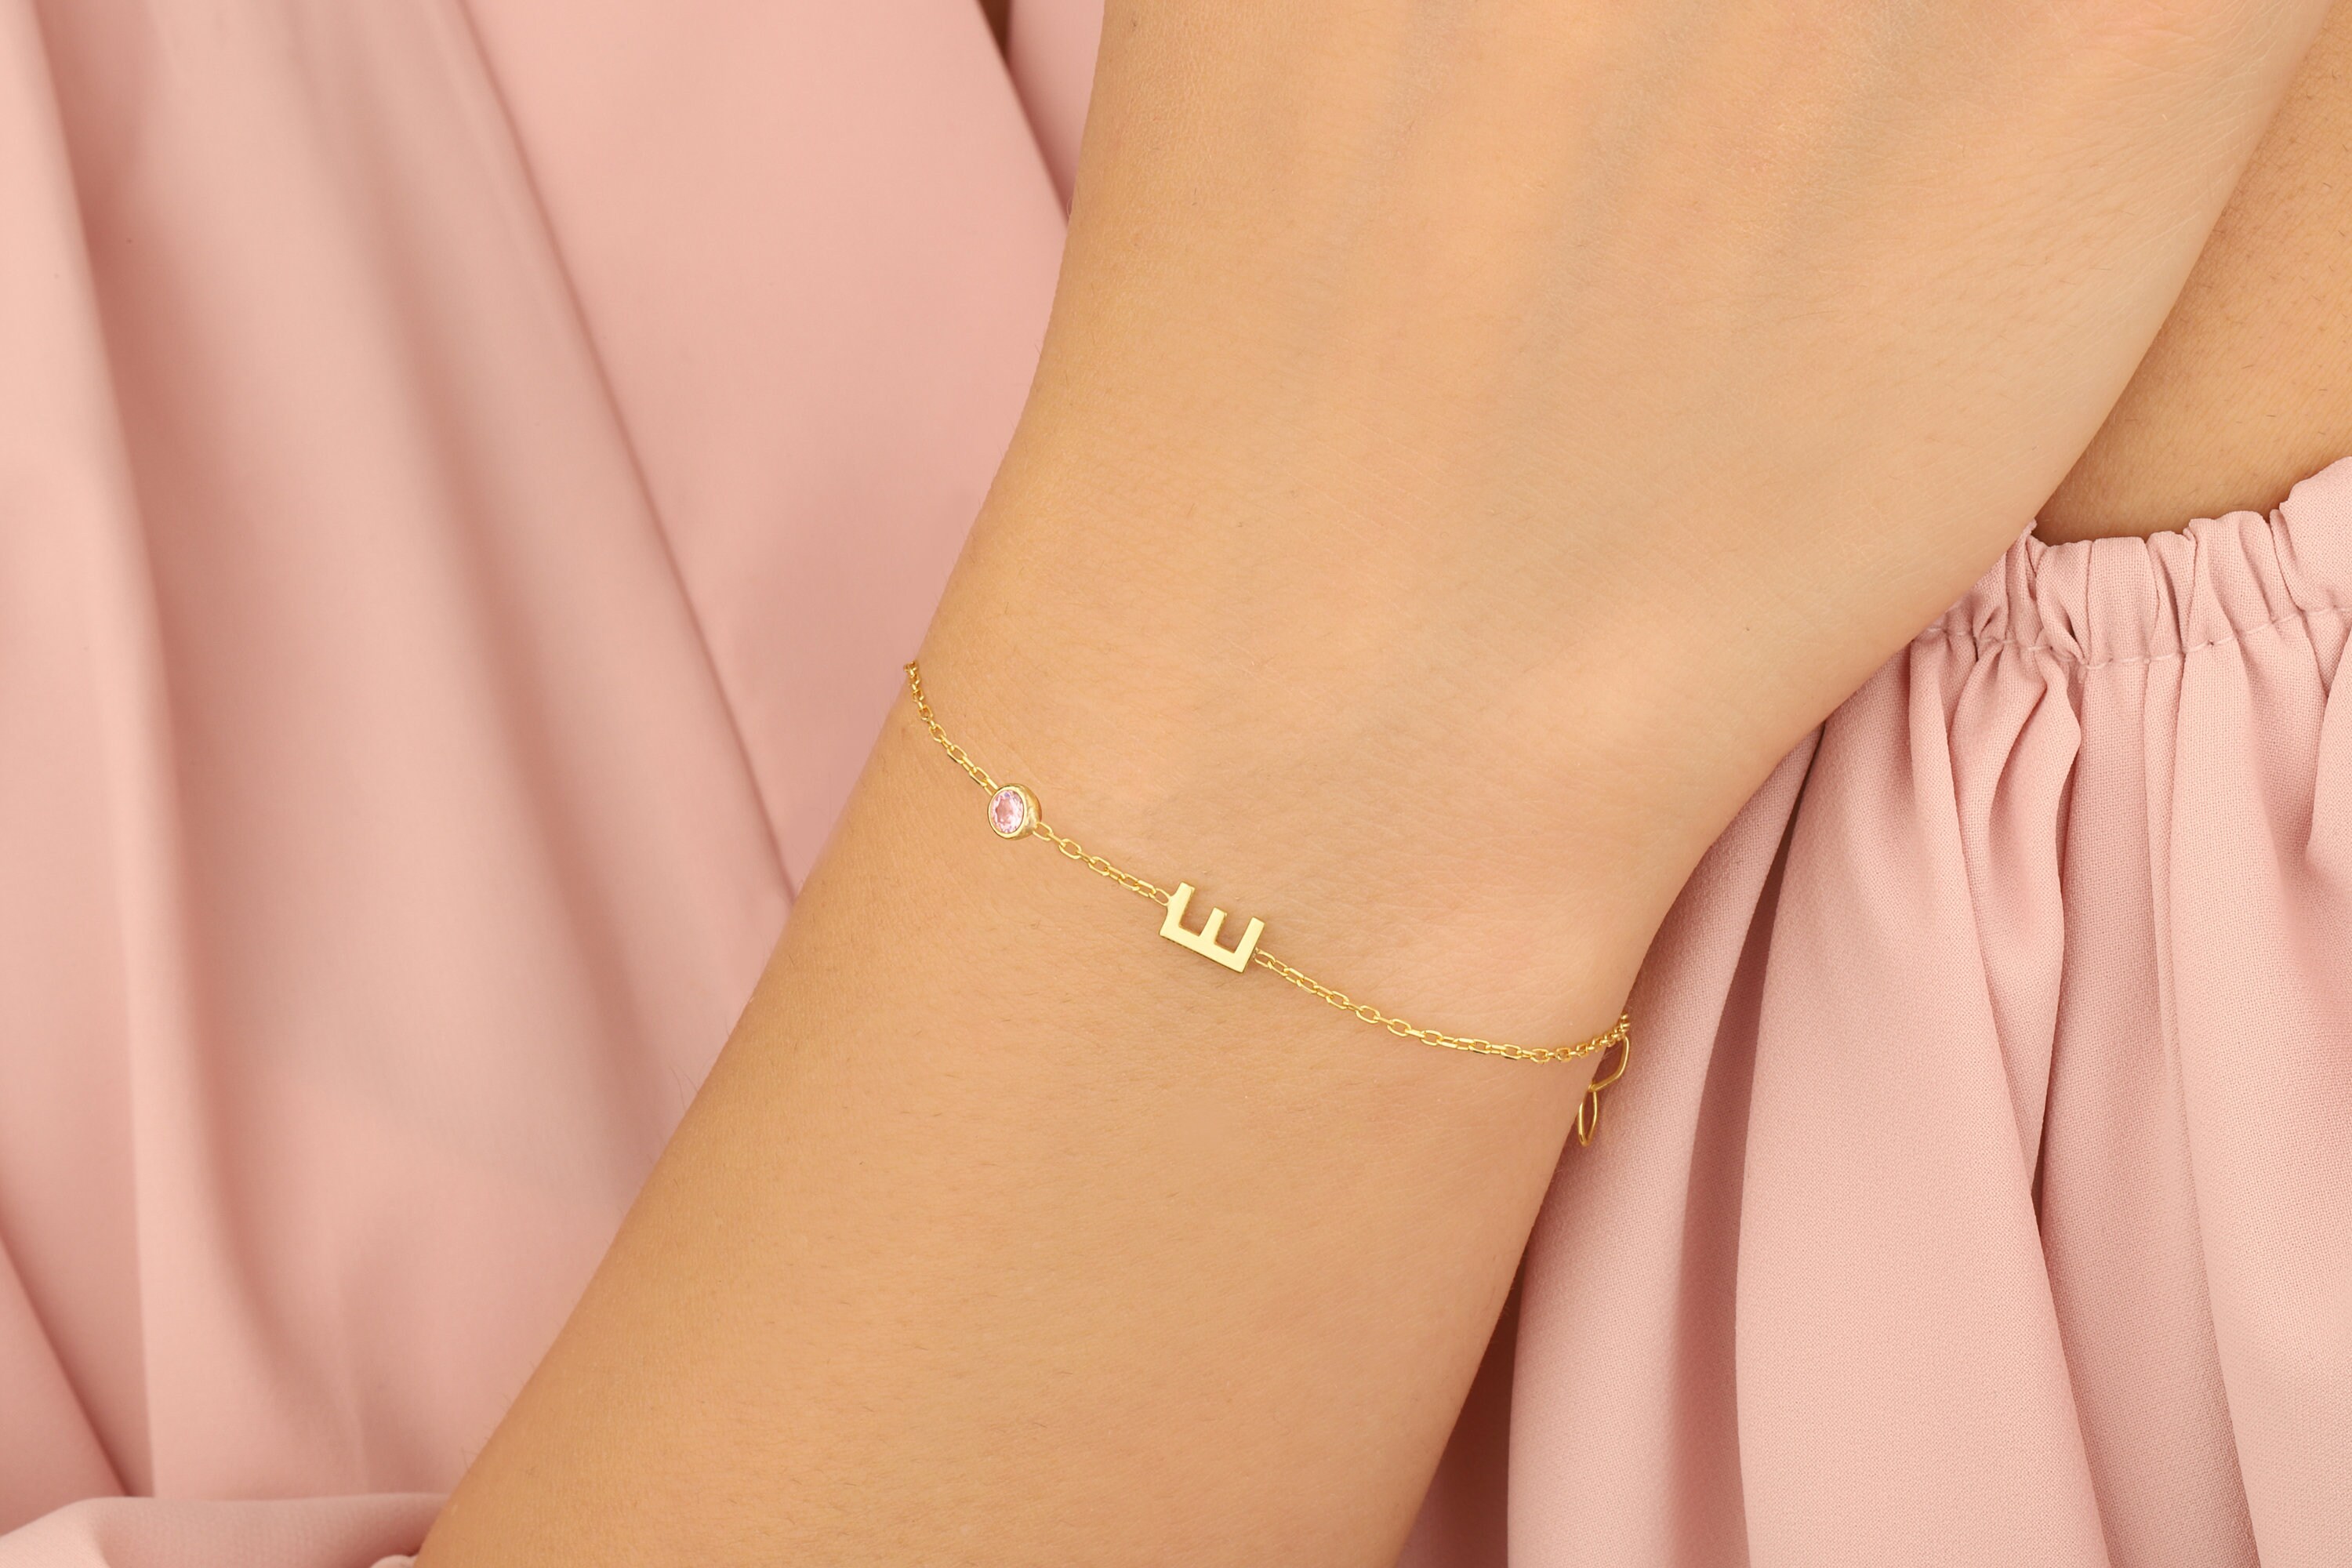 WUSUANED Rose Gold Initial Bracelet Letter Bracelet Adjustable Chain Bracelet Personalized Jewelry For Women Girls 